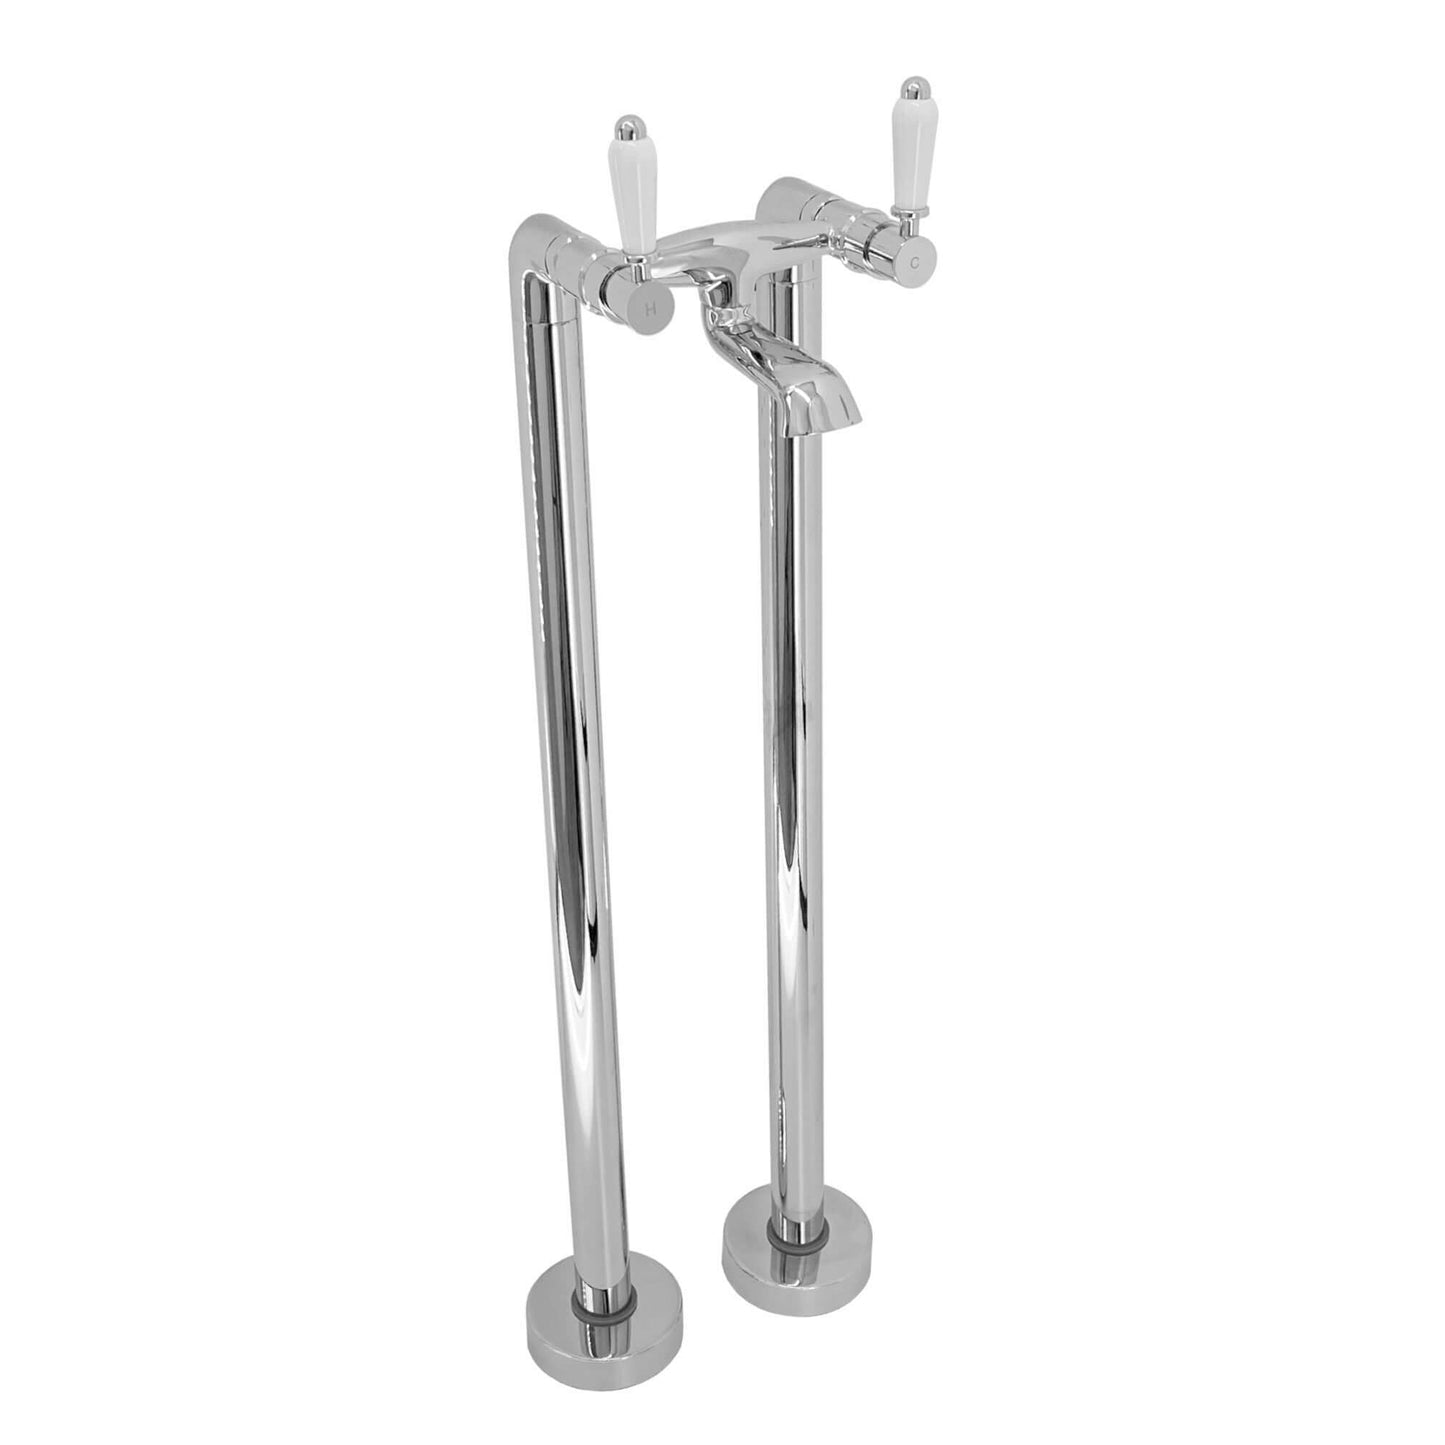 Downton floorstanding bath mixer tap with white ceramic levers - chrome - Taps